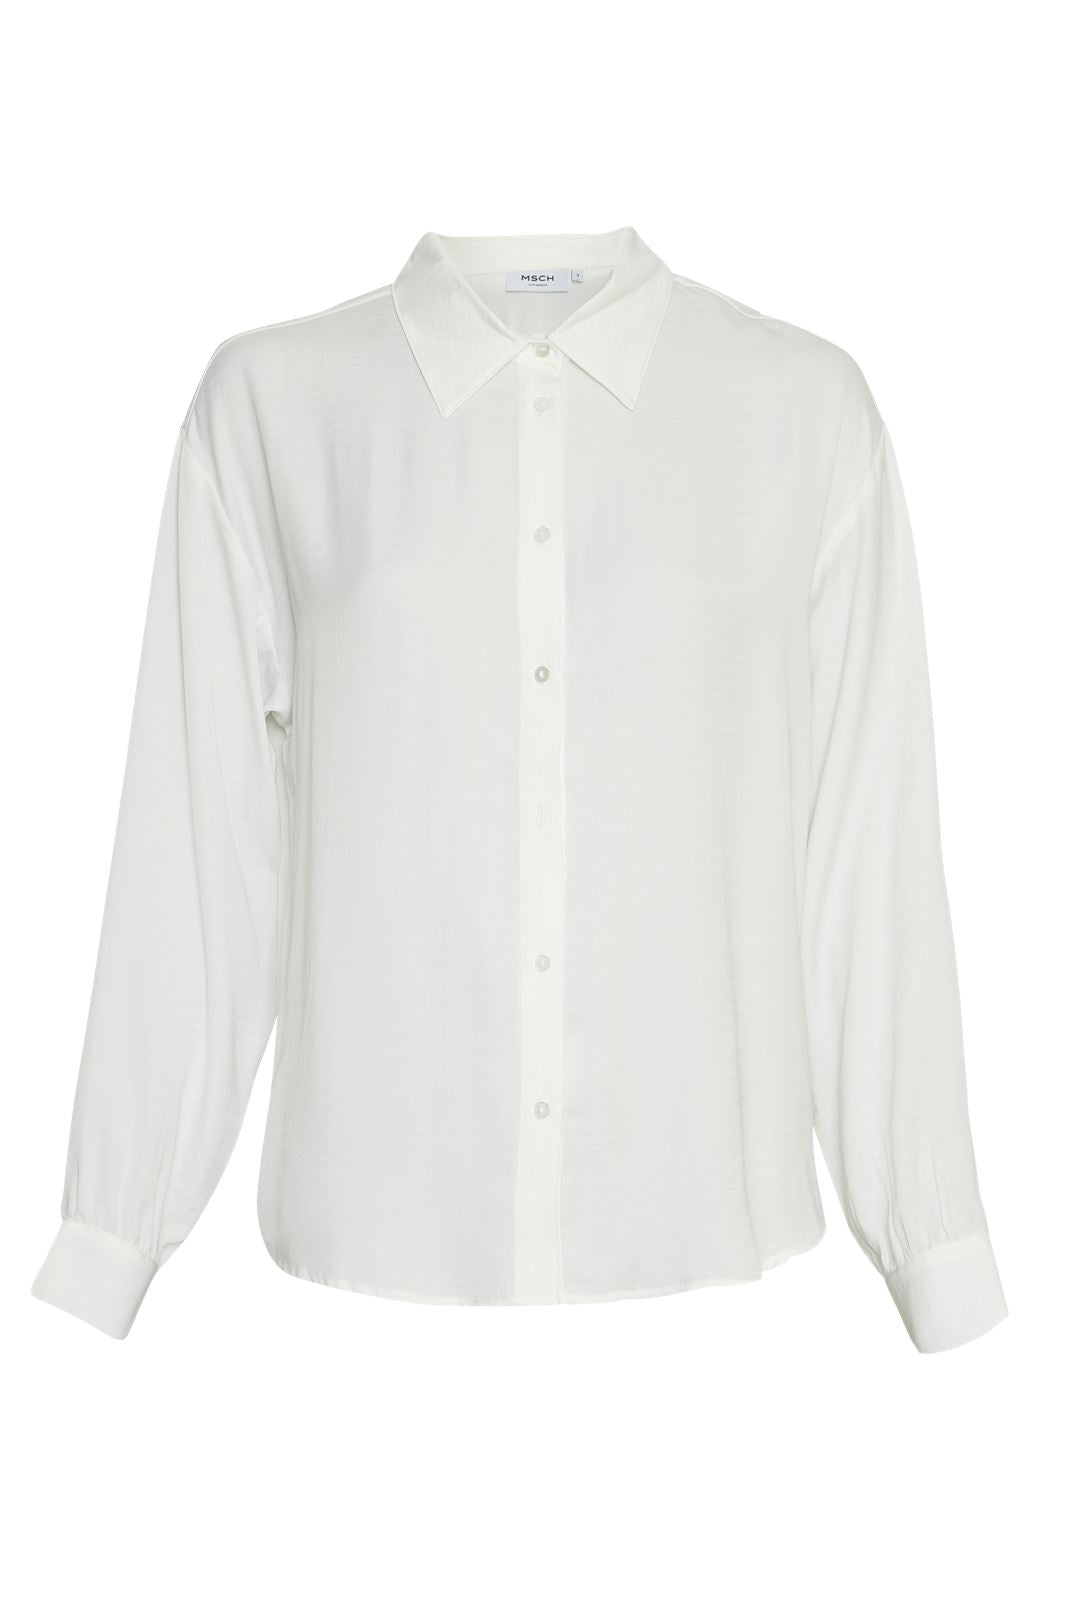 Moss Copenhagen - Mschsandeline Maluca Shirt - Cloud White